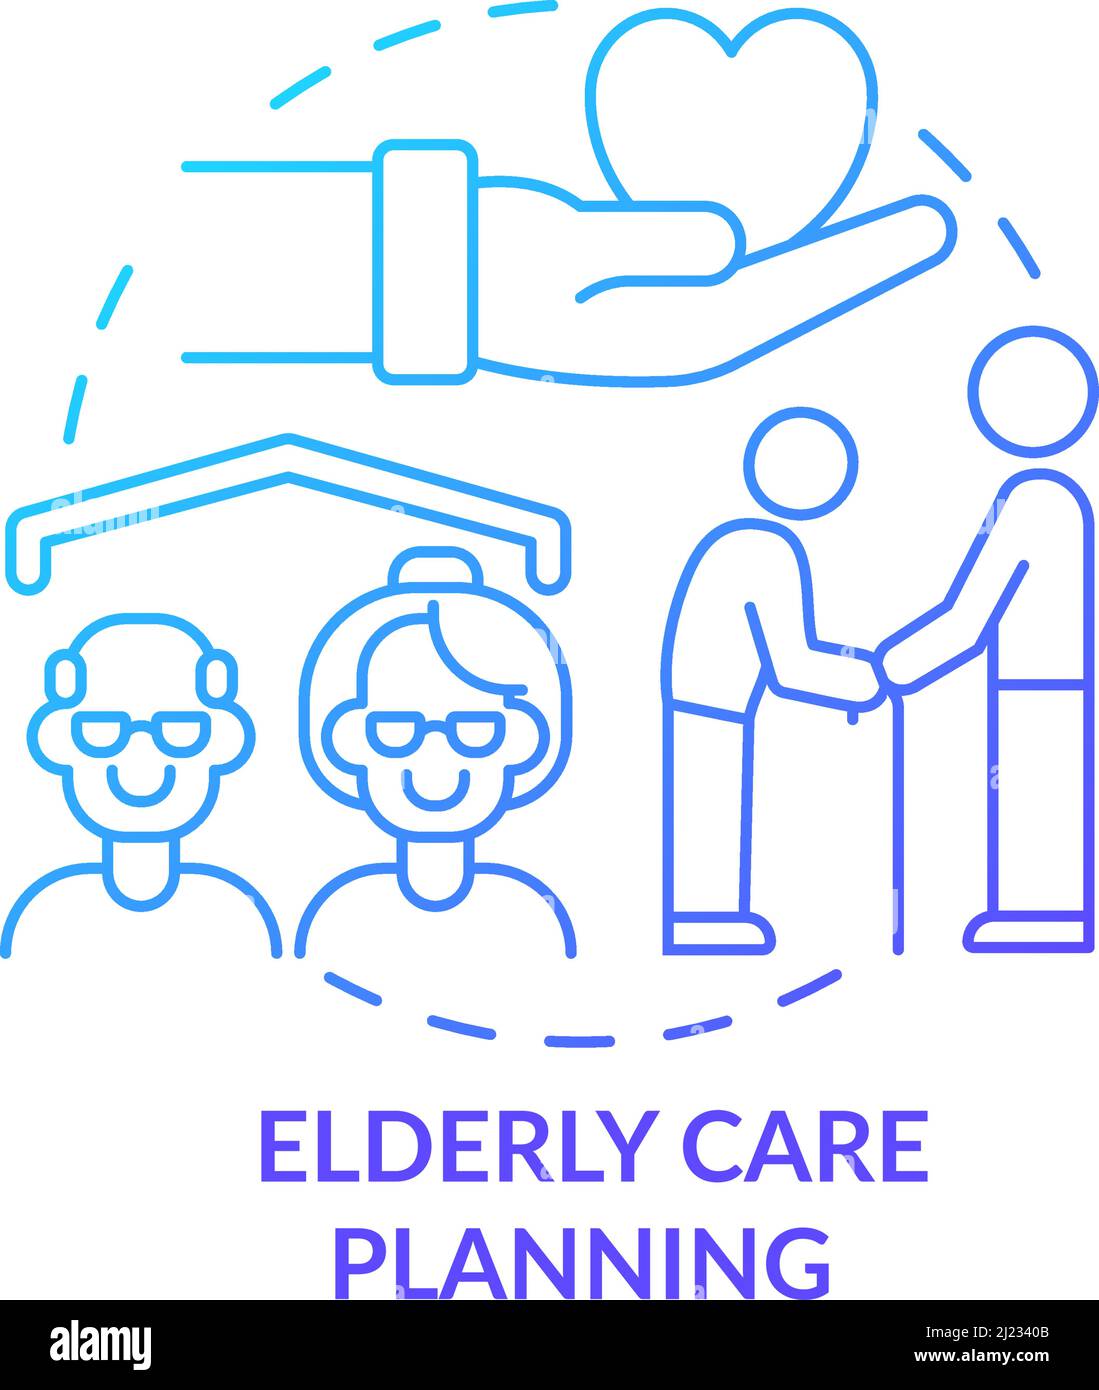 Elderly care planning blue gradient concept icon Stock Vector